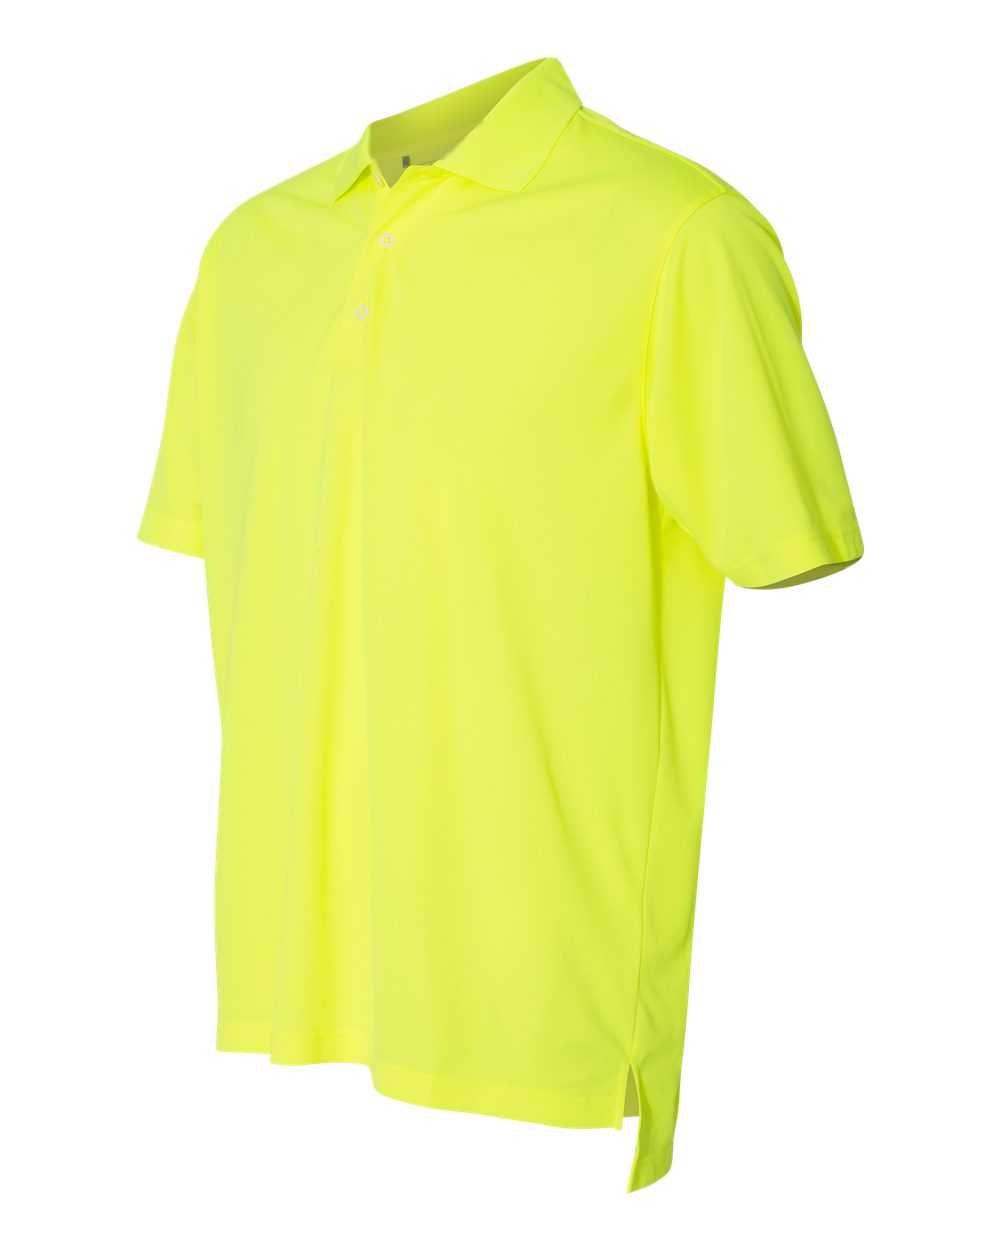 Adidas A130 Basic Sport Shirt - Solar Yellow White - HIT a Double